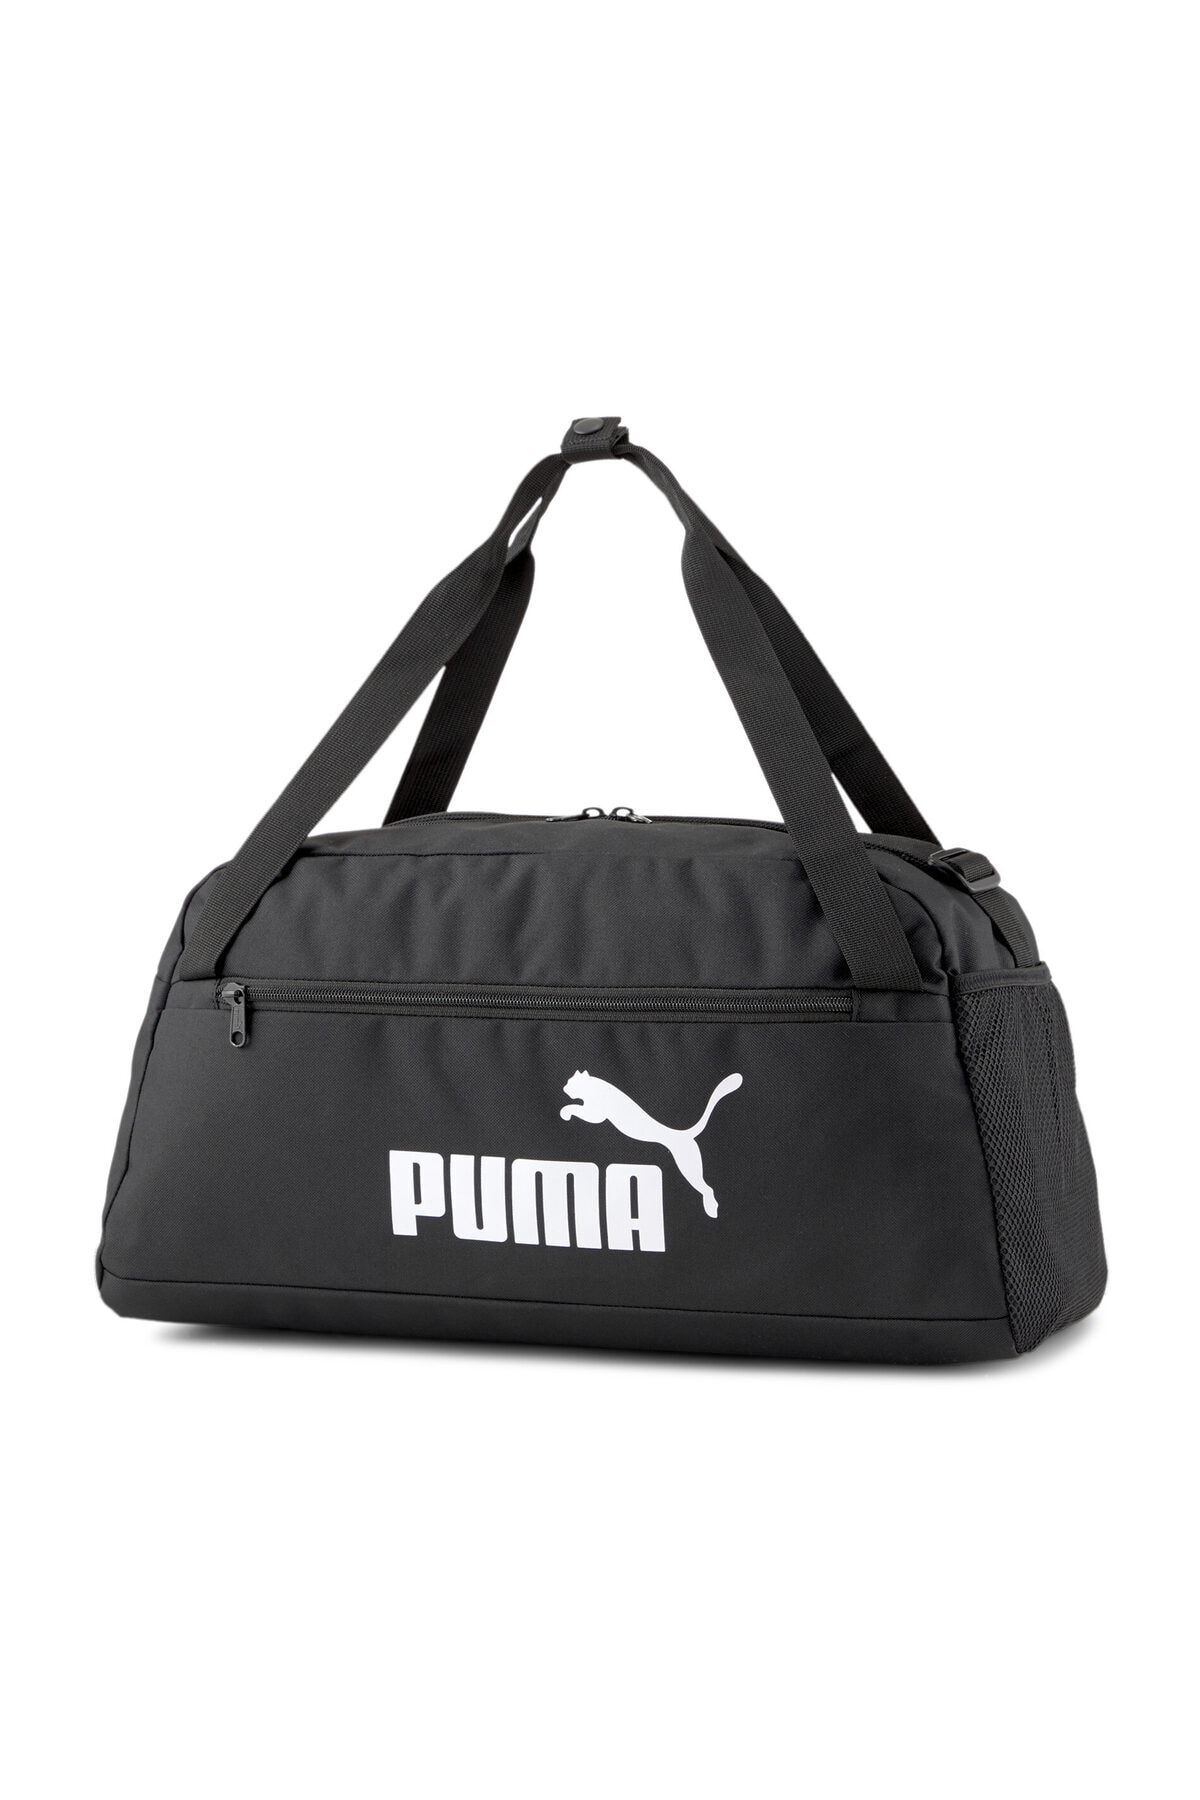 Puma Unisex Spor Çantası 46x20x23